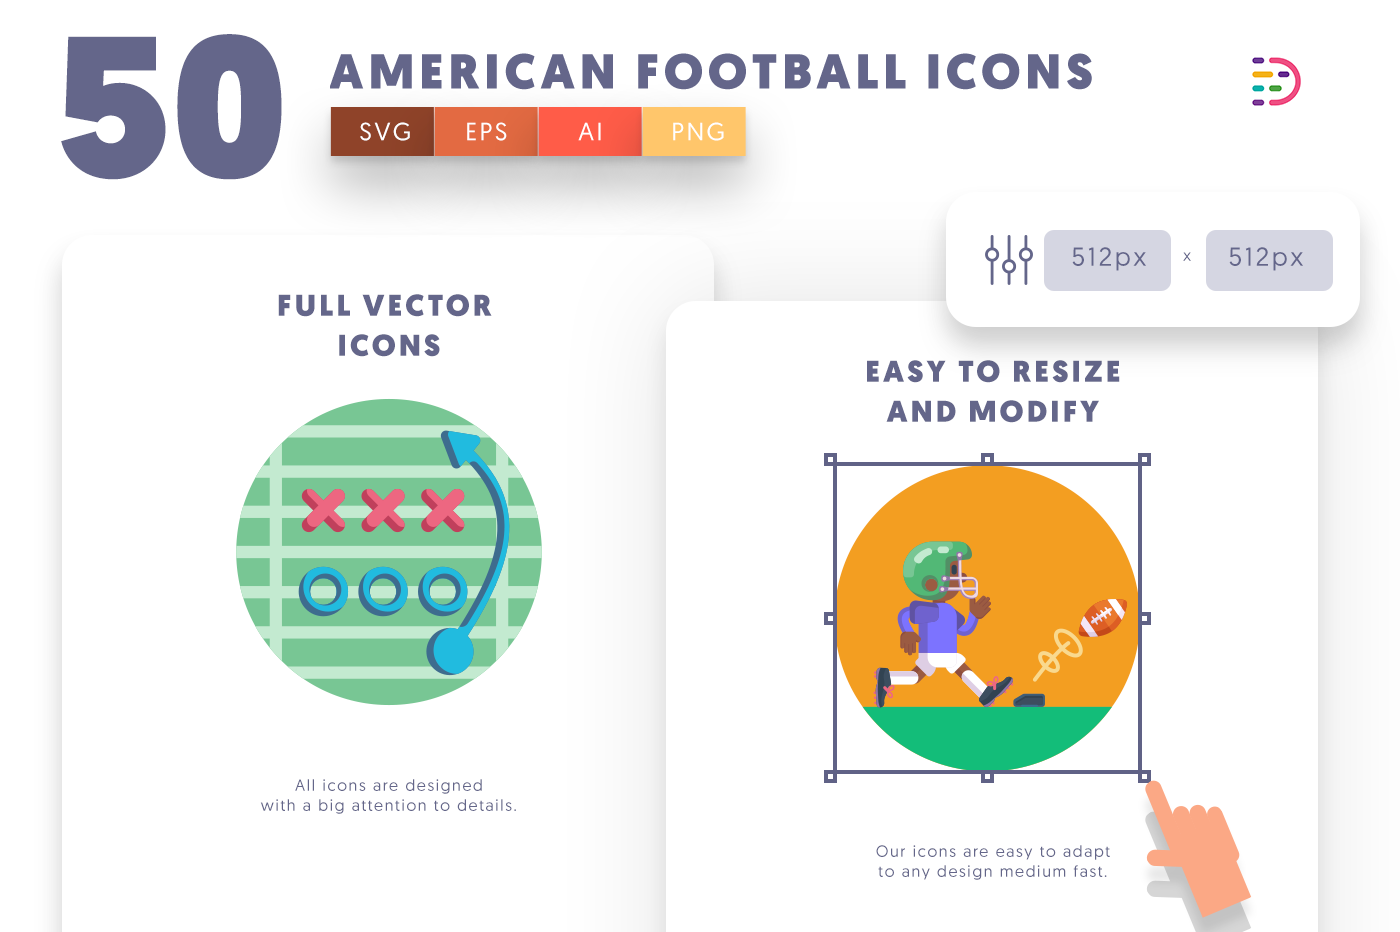 Full vector American football Icons